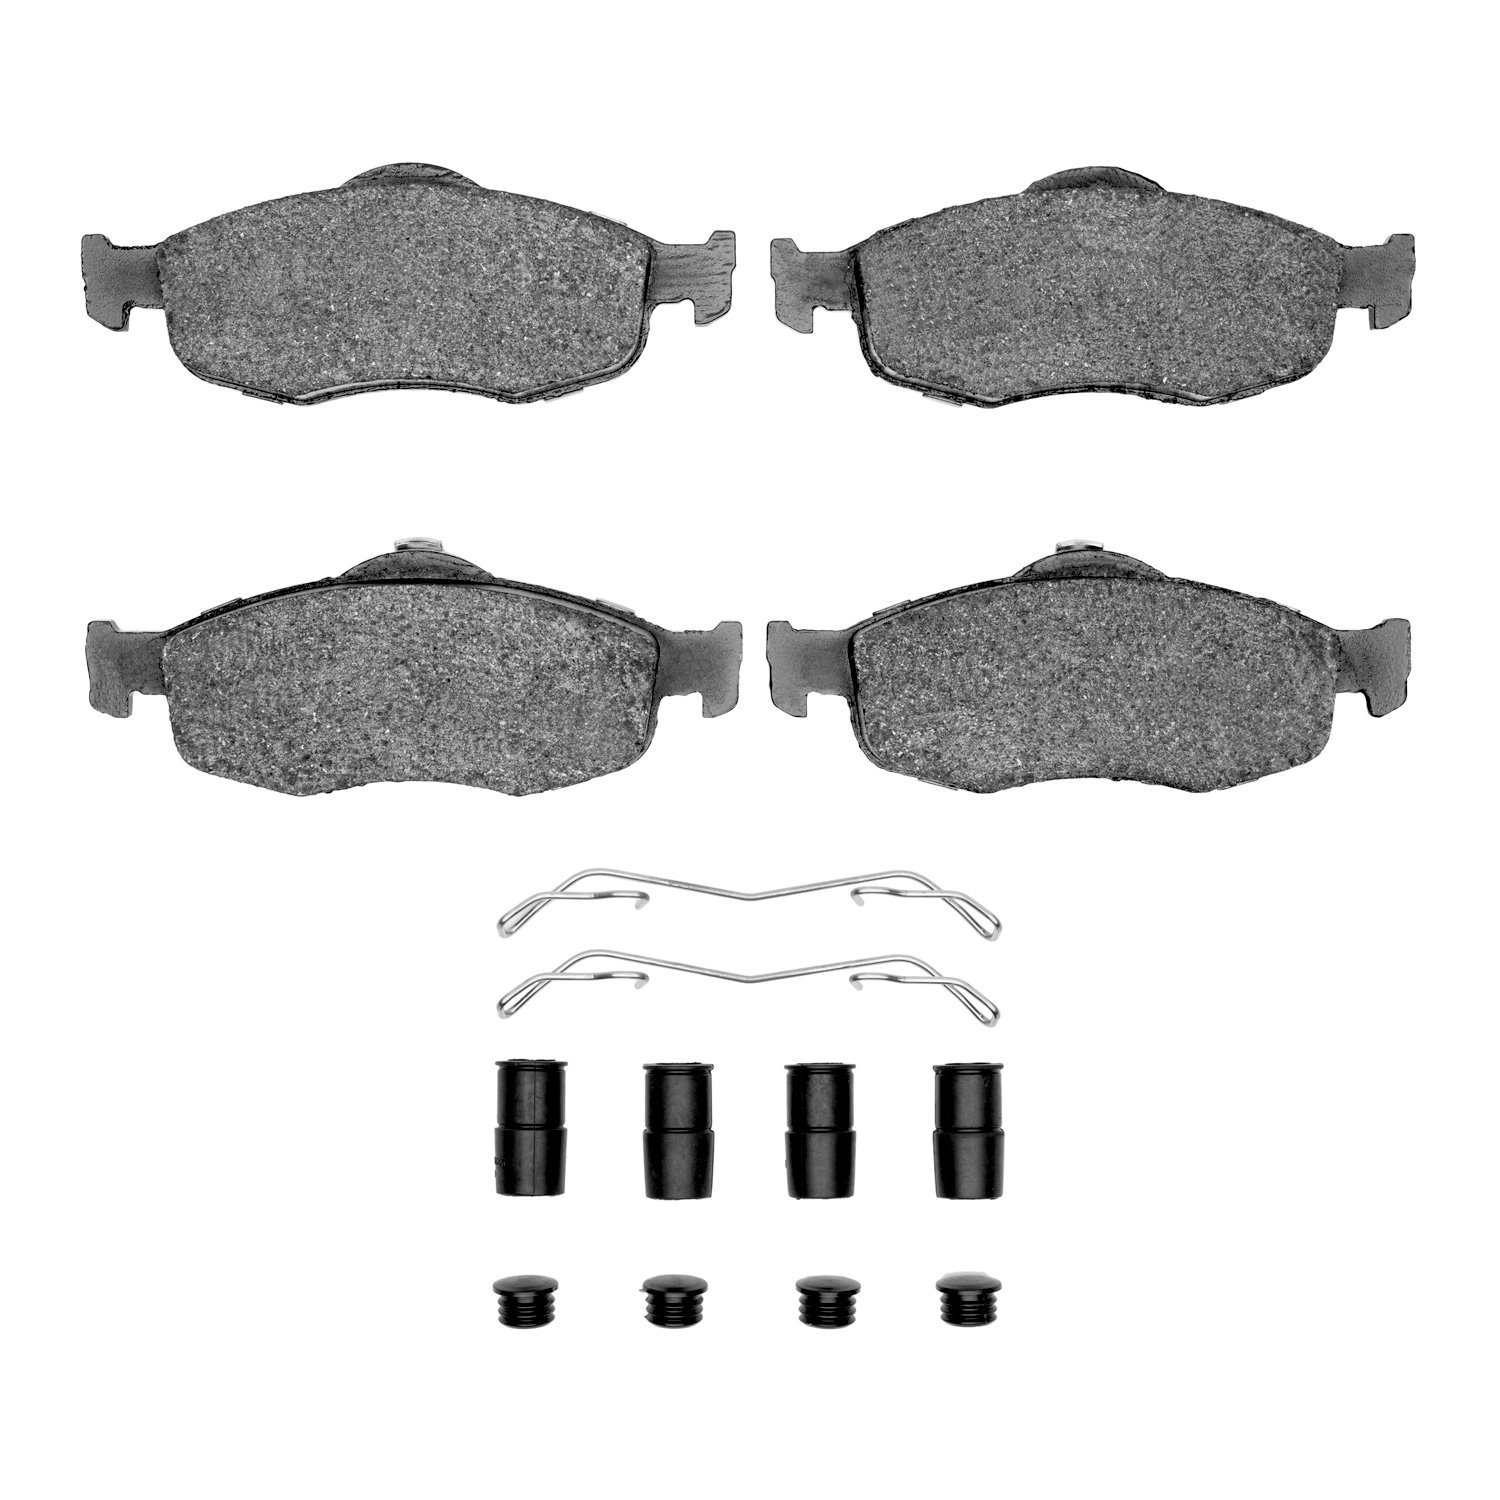 1600-0648-01 5000 Euro Ceramic Brake Pads & Hardware Kit, 1995-2002 Ford/Lincoln/Mercury/Mazda, Position: Front